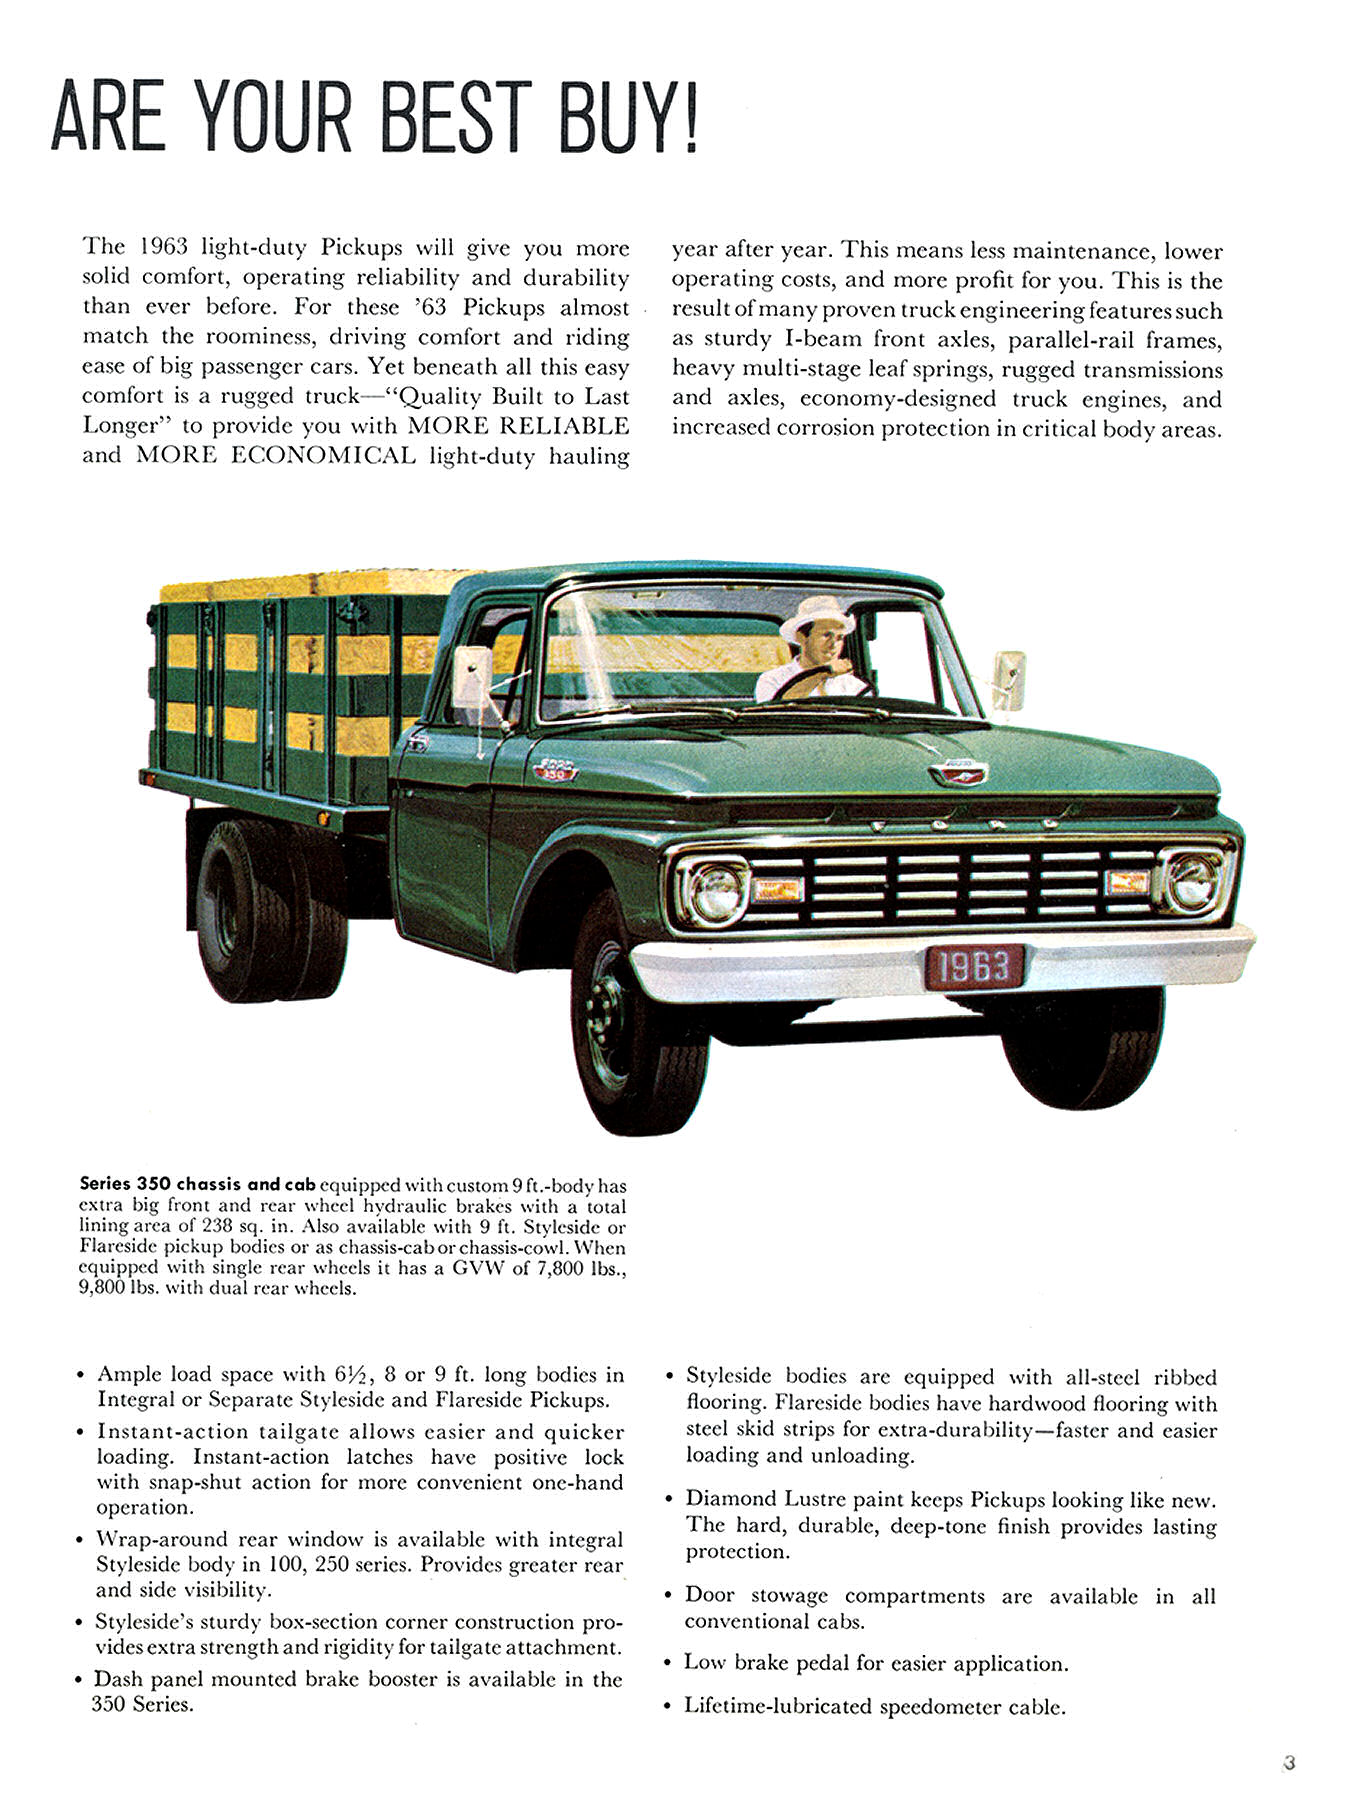 1963 Ford Light Duty Trucks (Cdn)-03